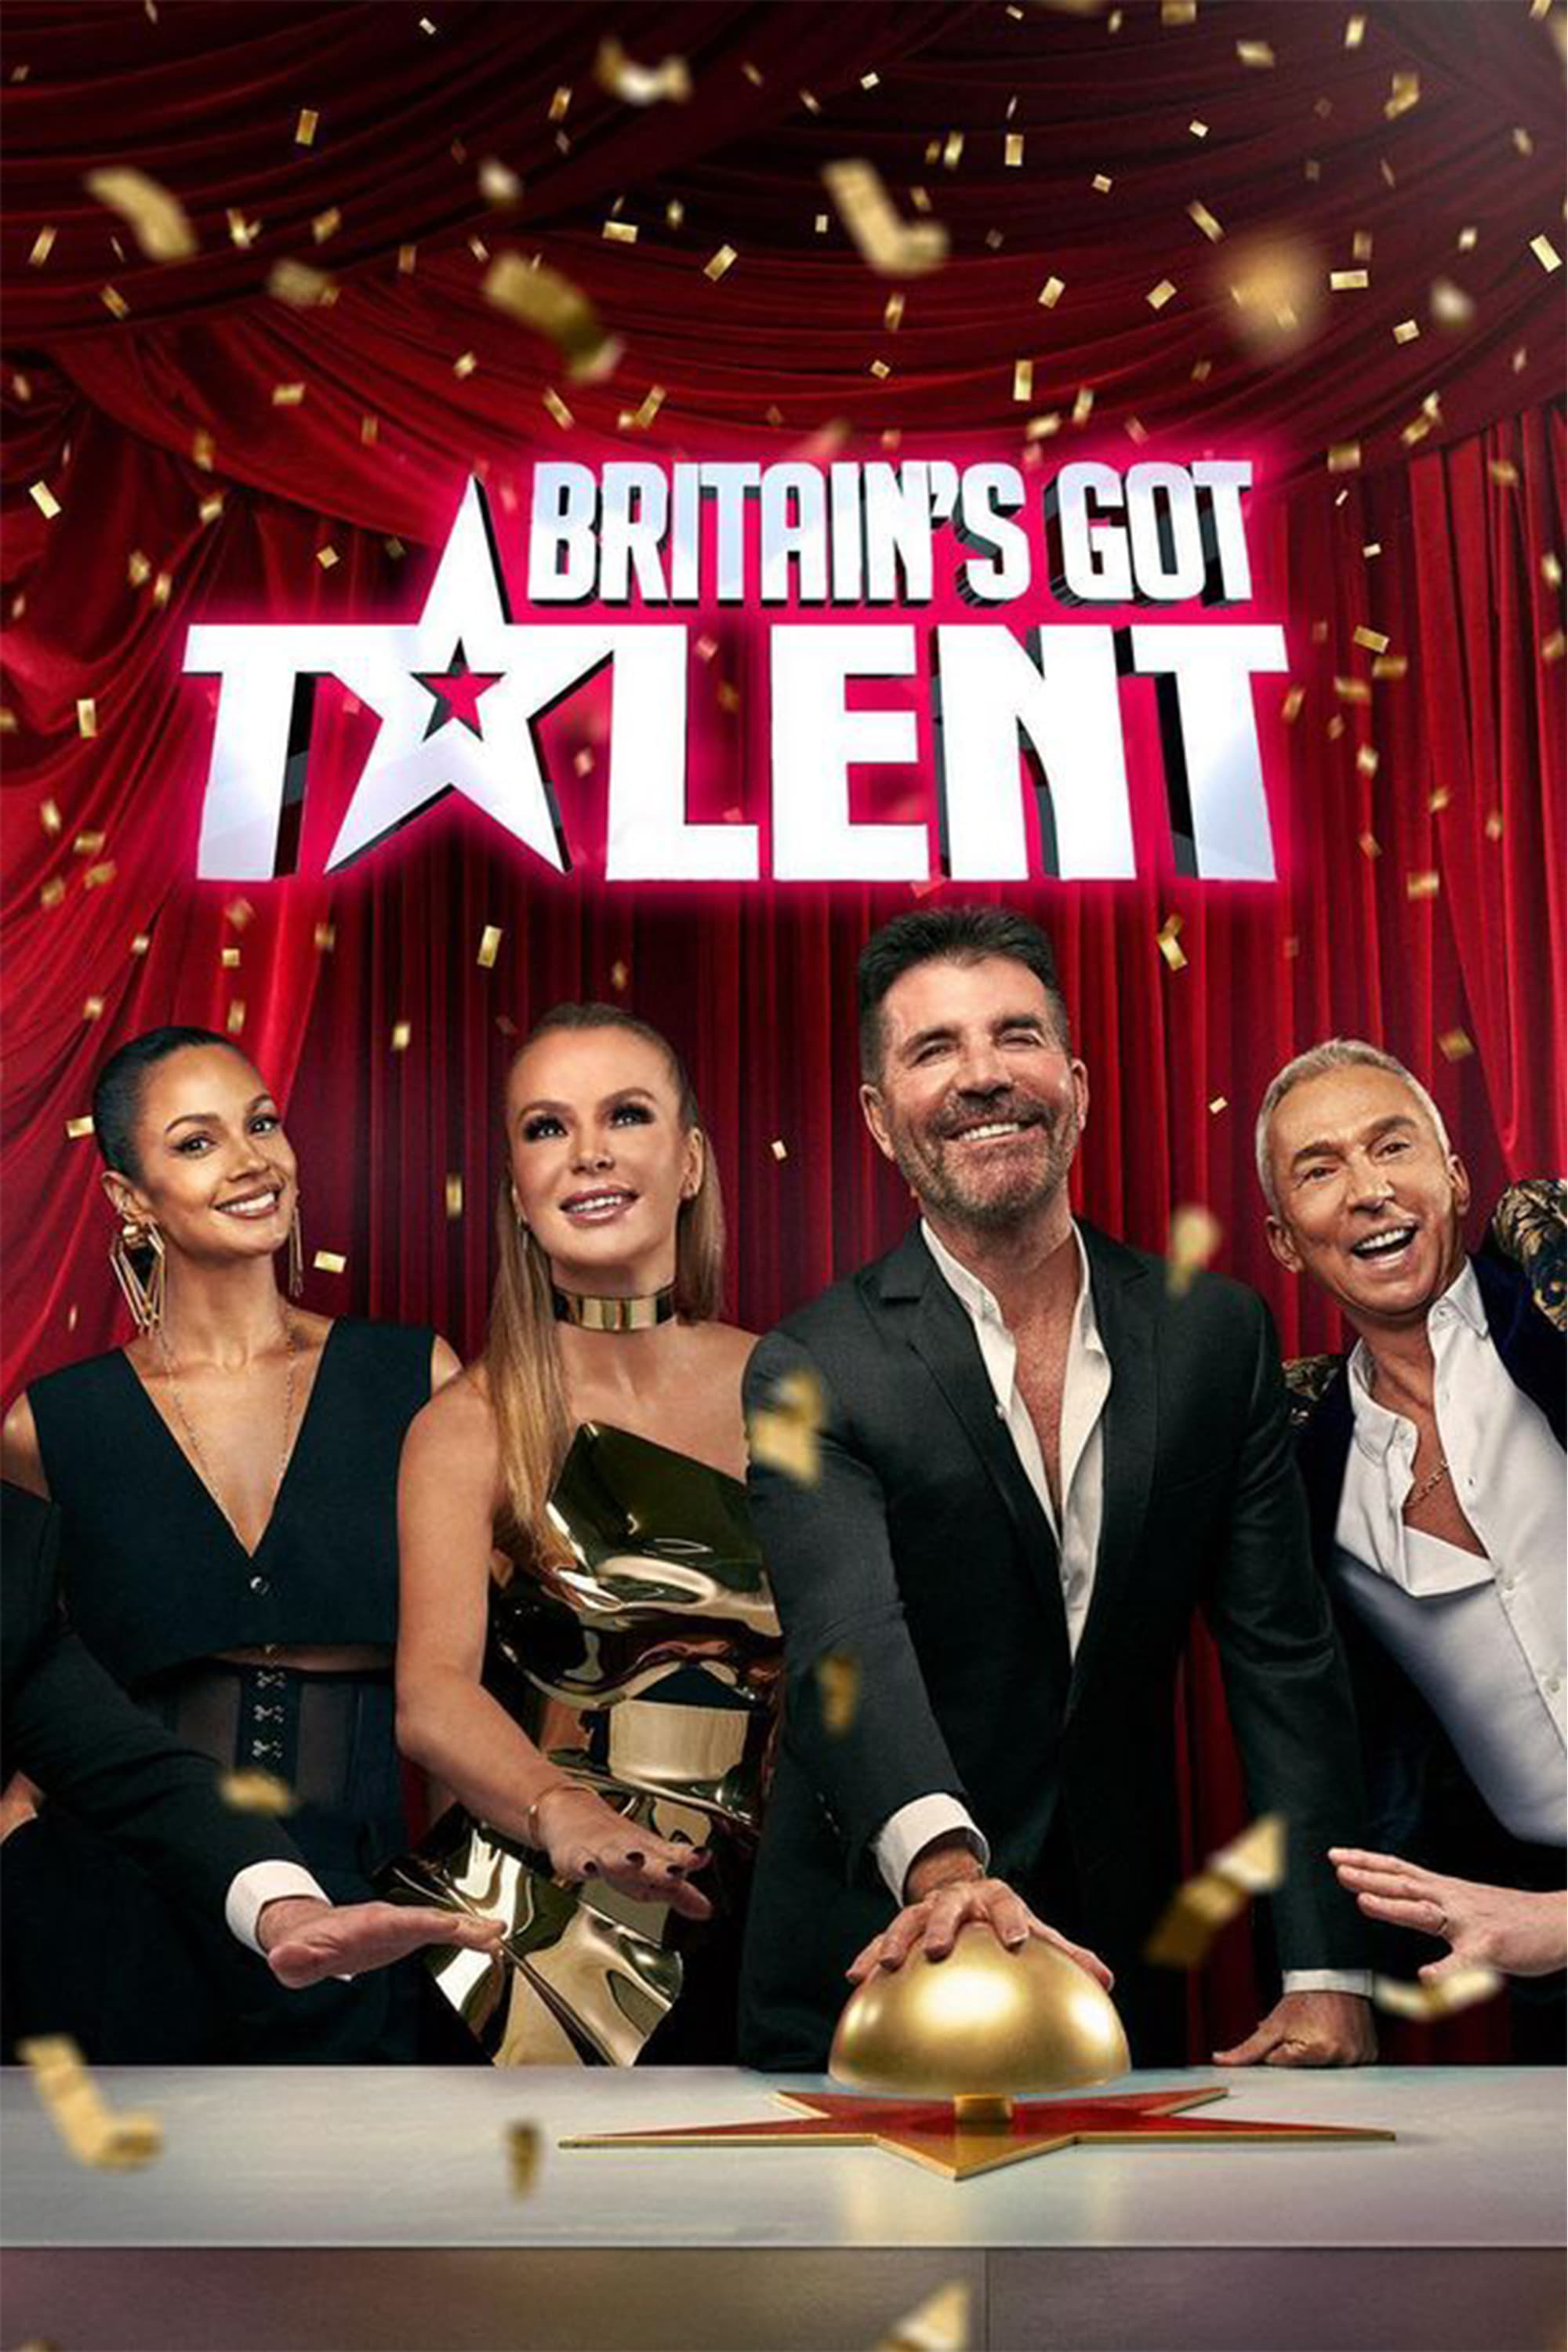 Britain's Got Talent Season 16